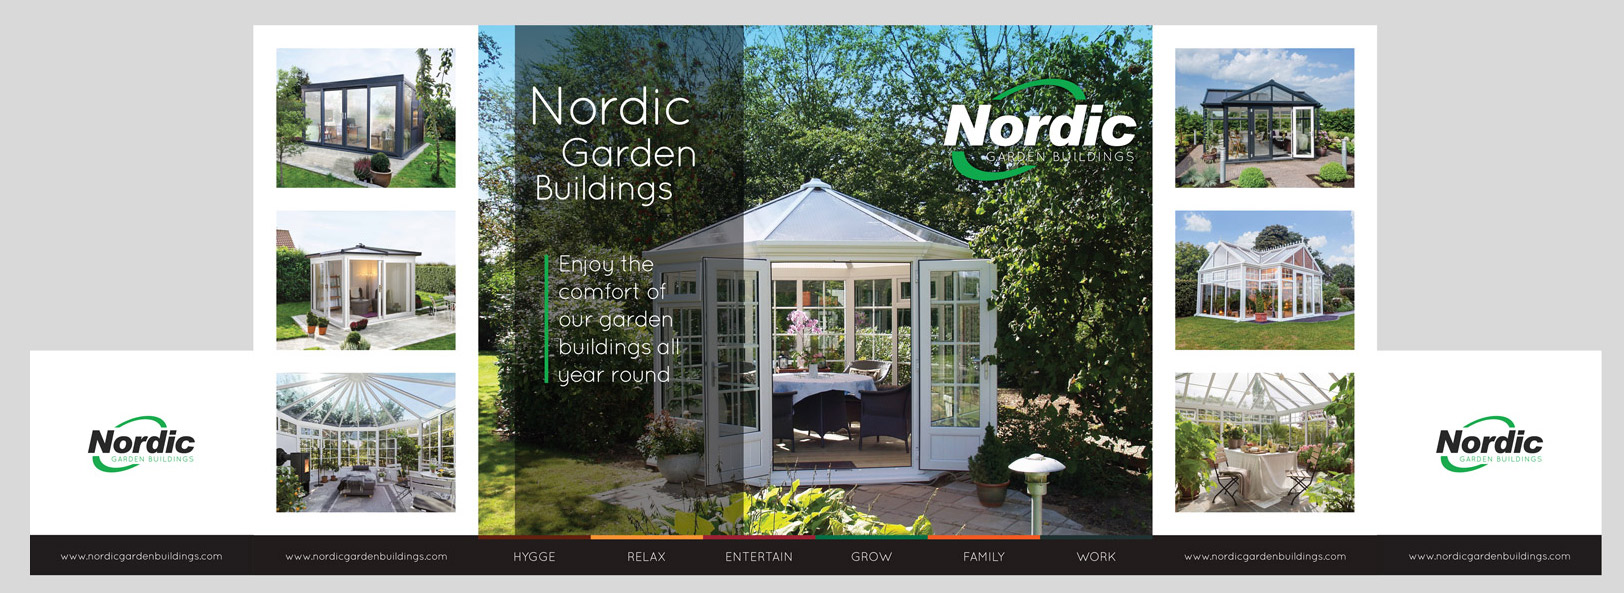 Nordic Garden Buildings / Exhibition Stand Graphics